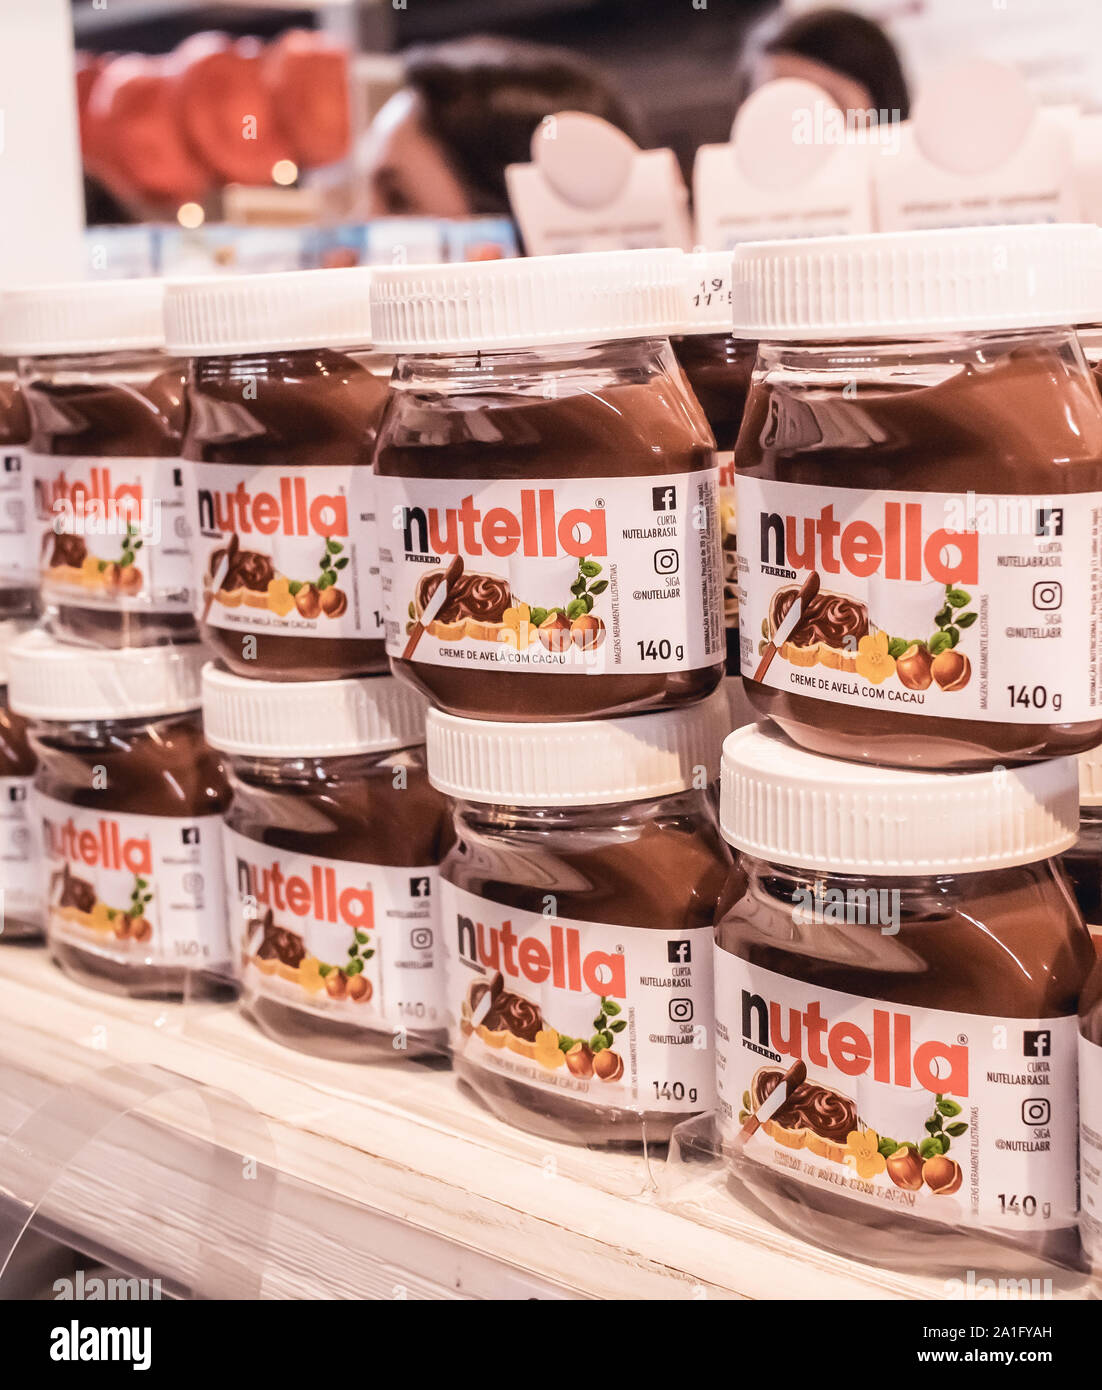 Nutella jars displayed on a market shelf. Stock Photo